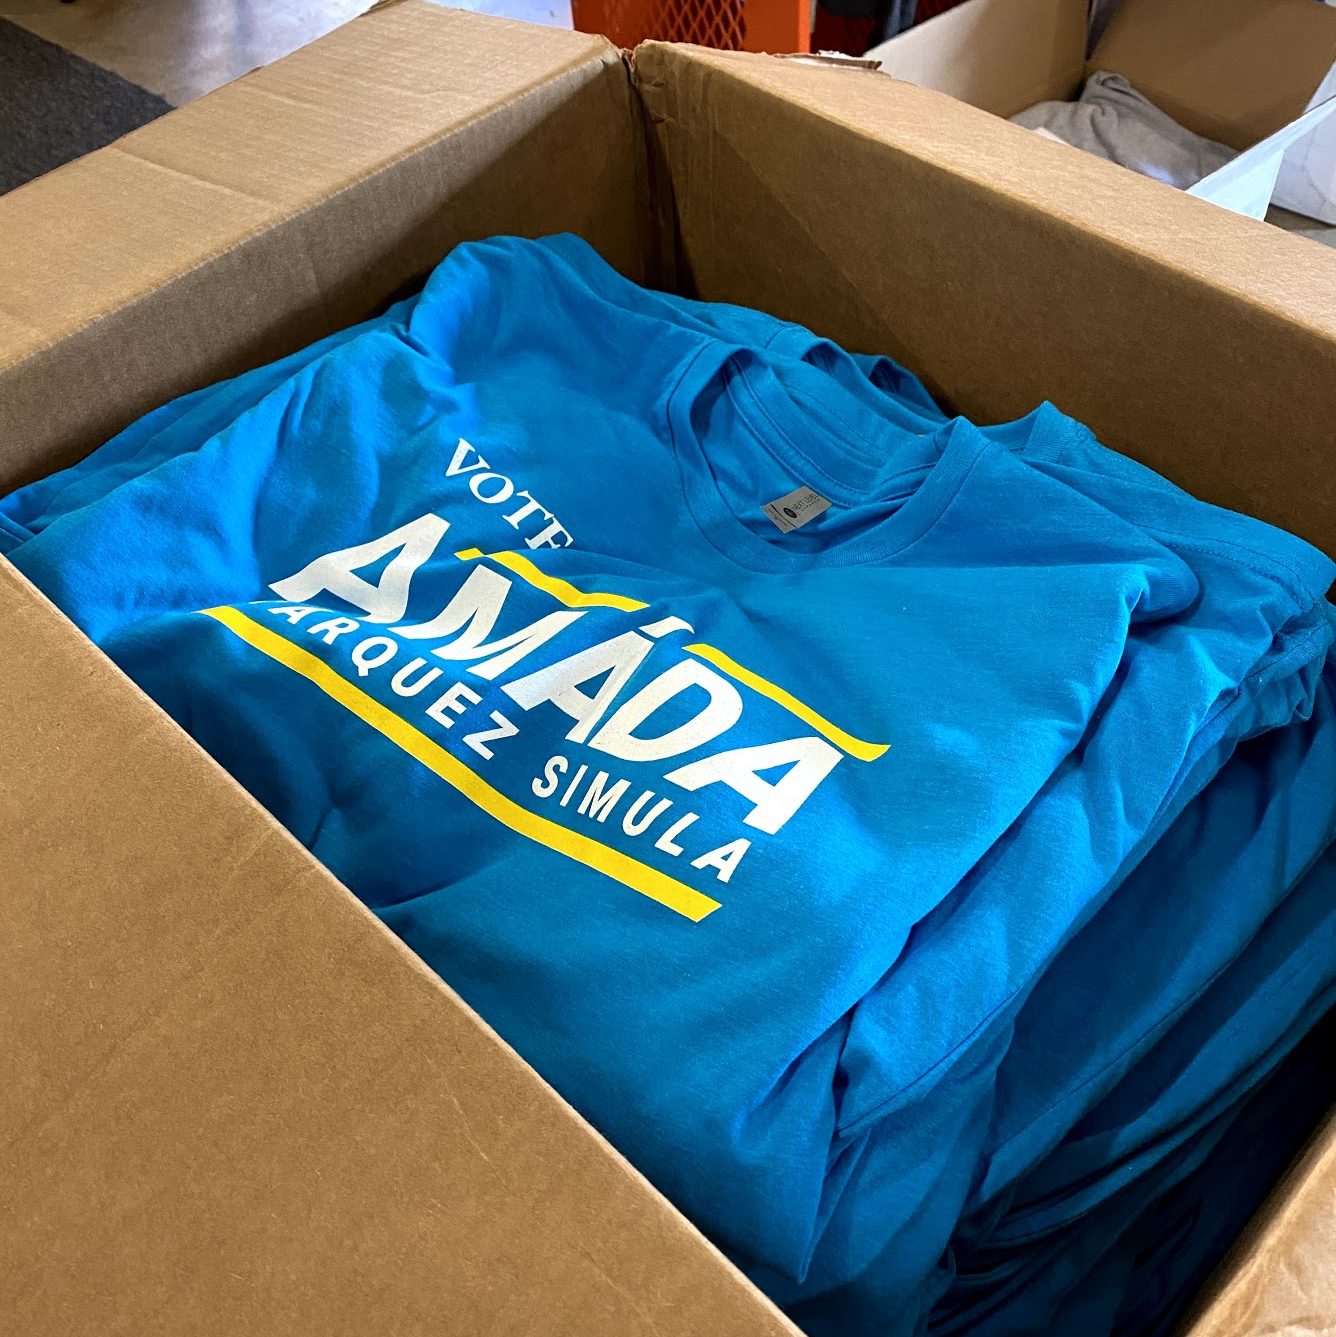 A cardboard box full of blue T-shirts printed Vote Amáda Márquez Simula.